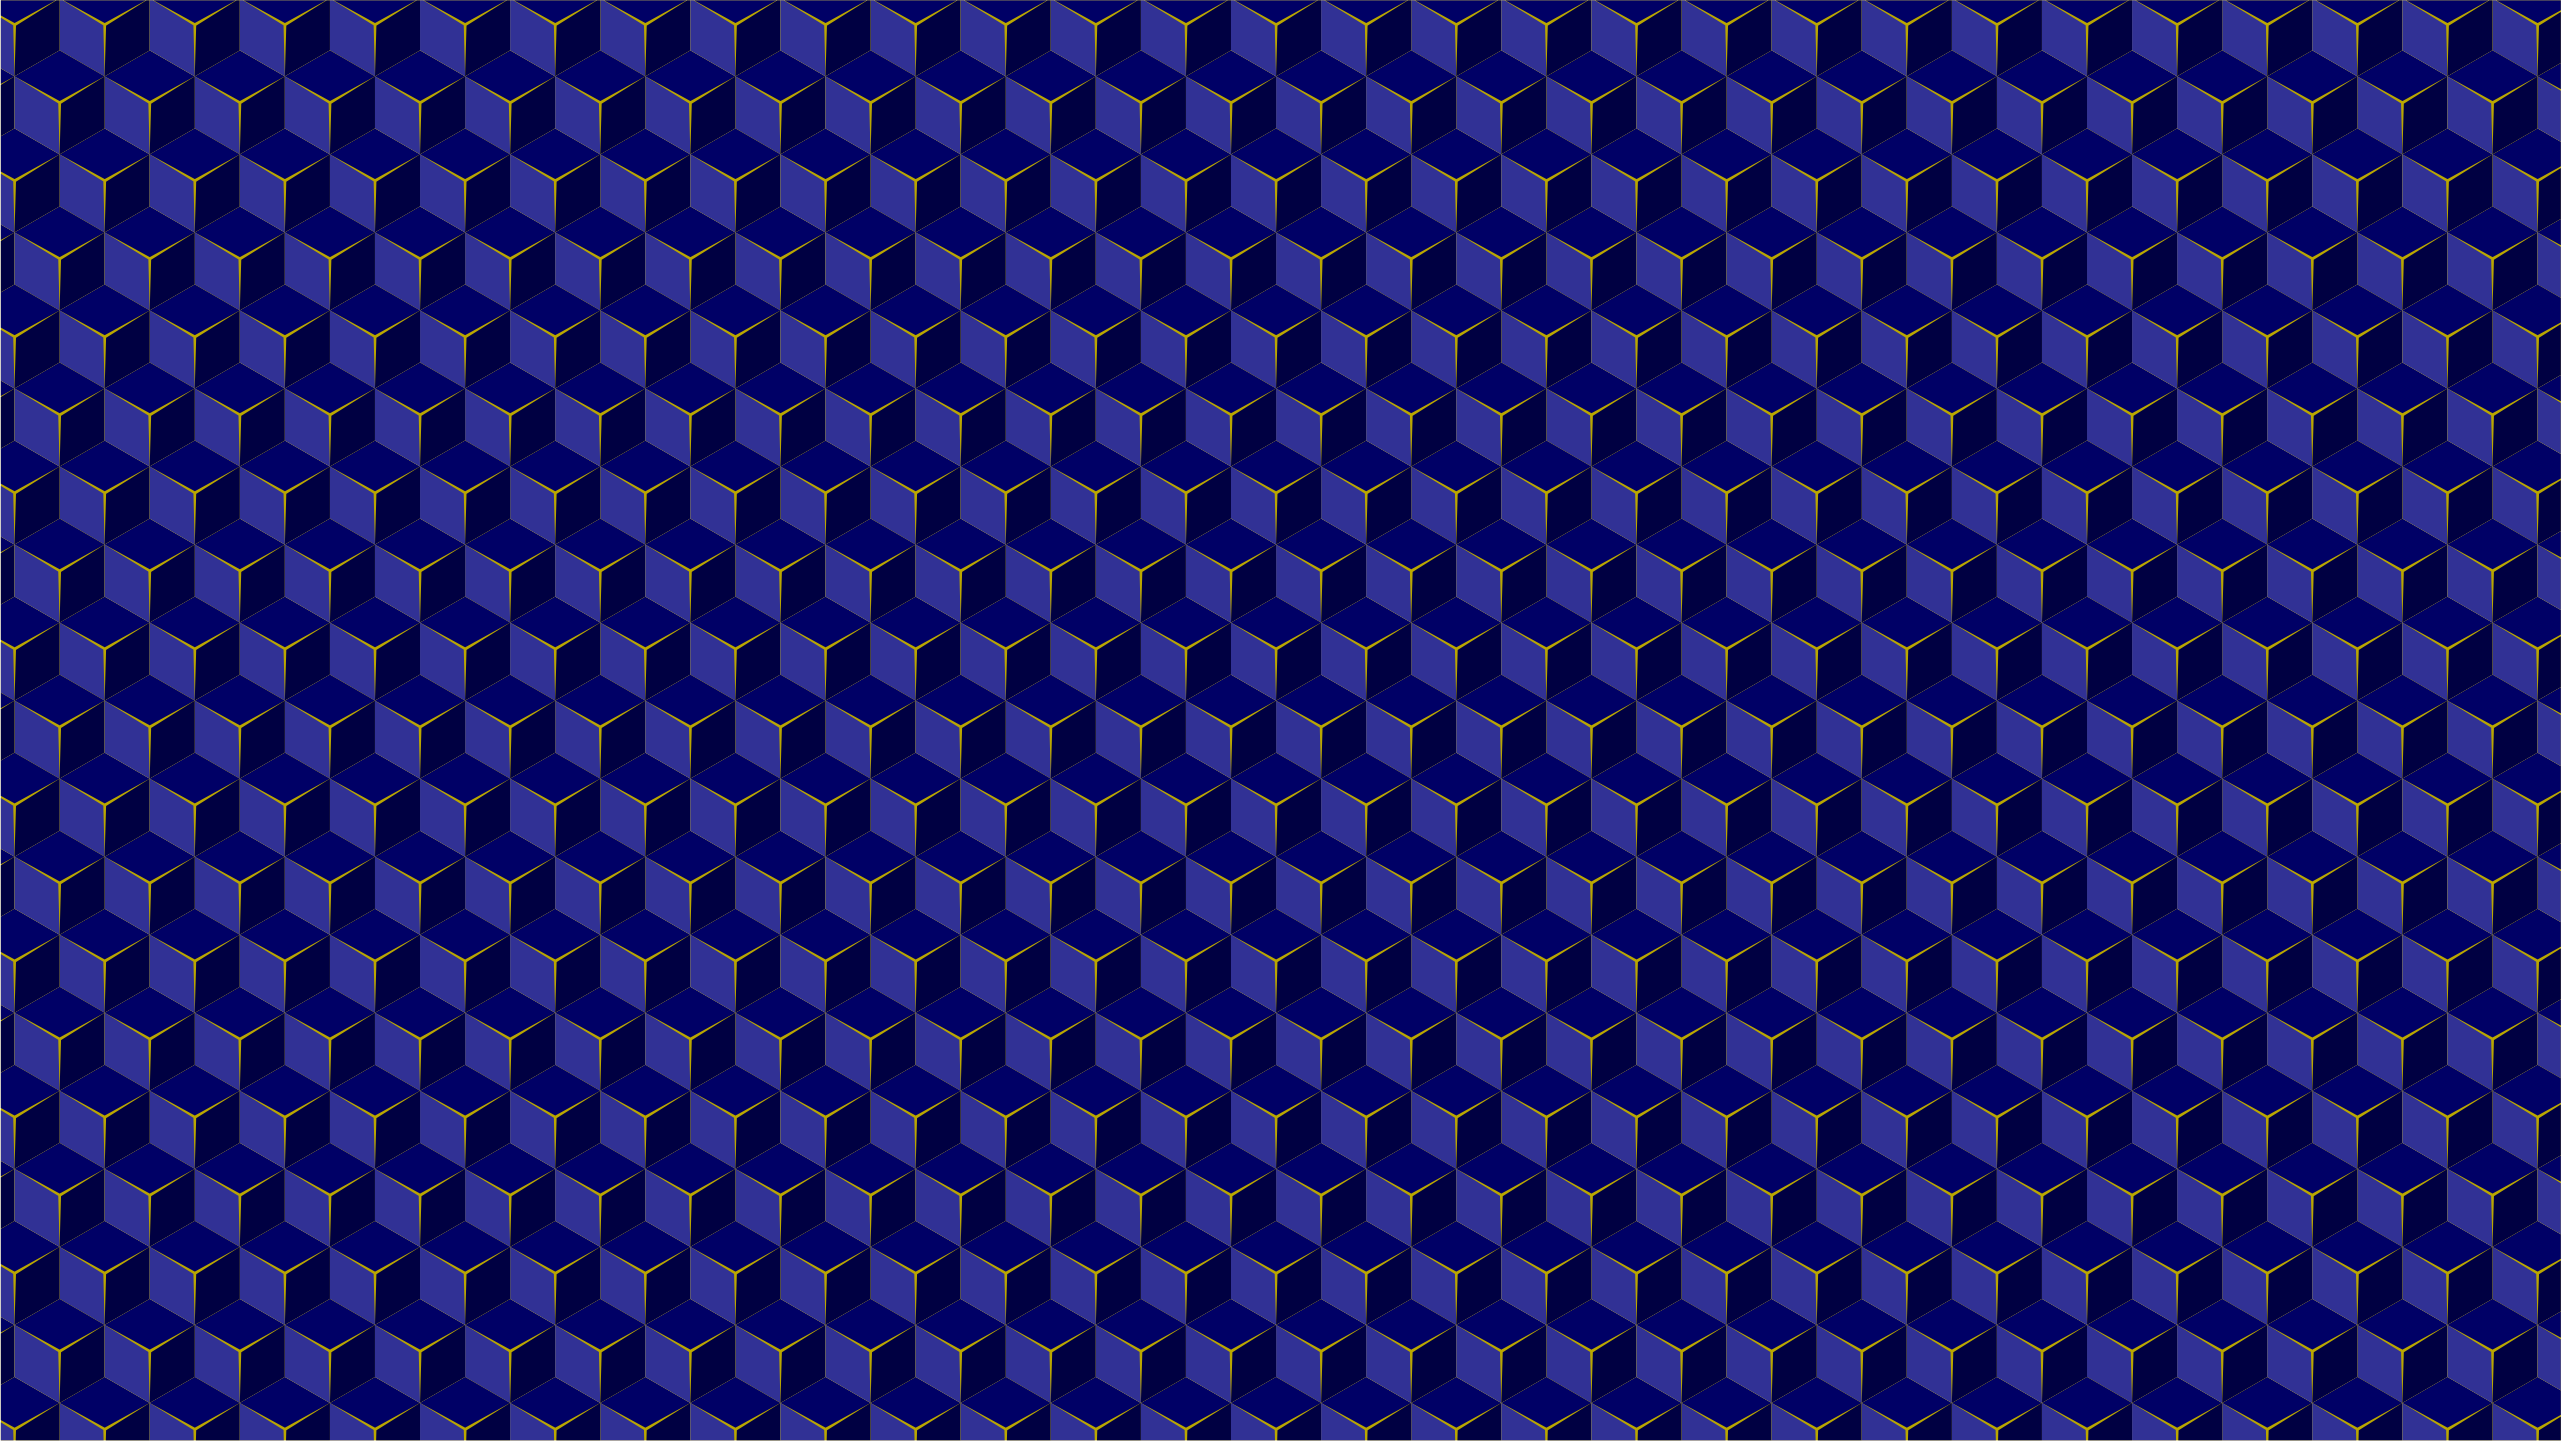 Geometry Abstract Digital Art Cube Illusion 2561x1441